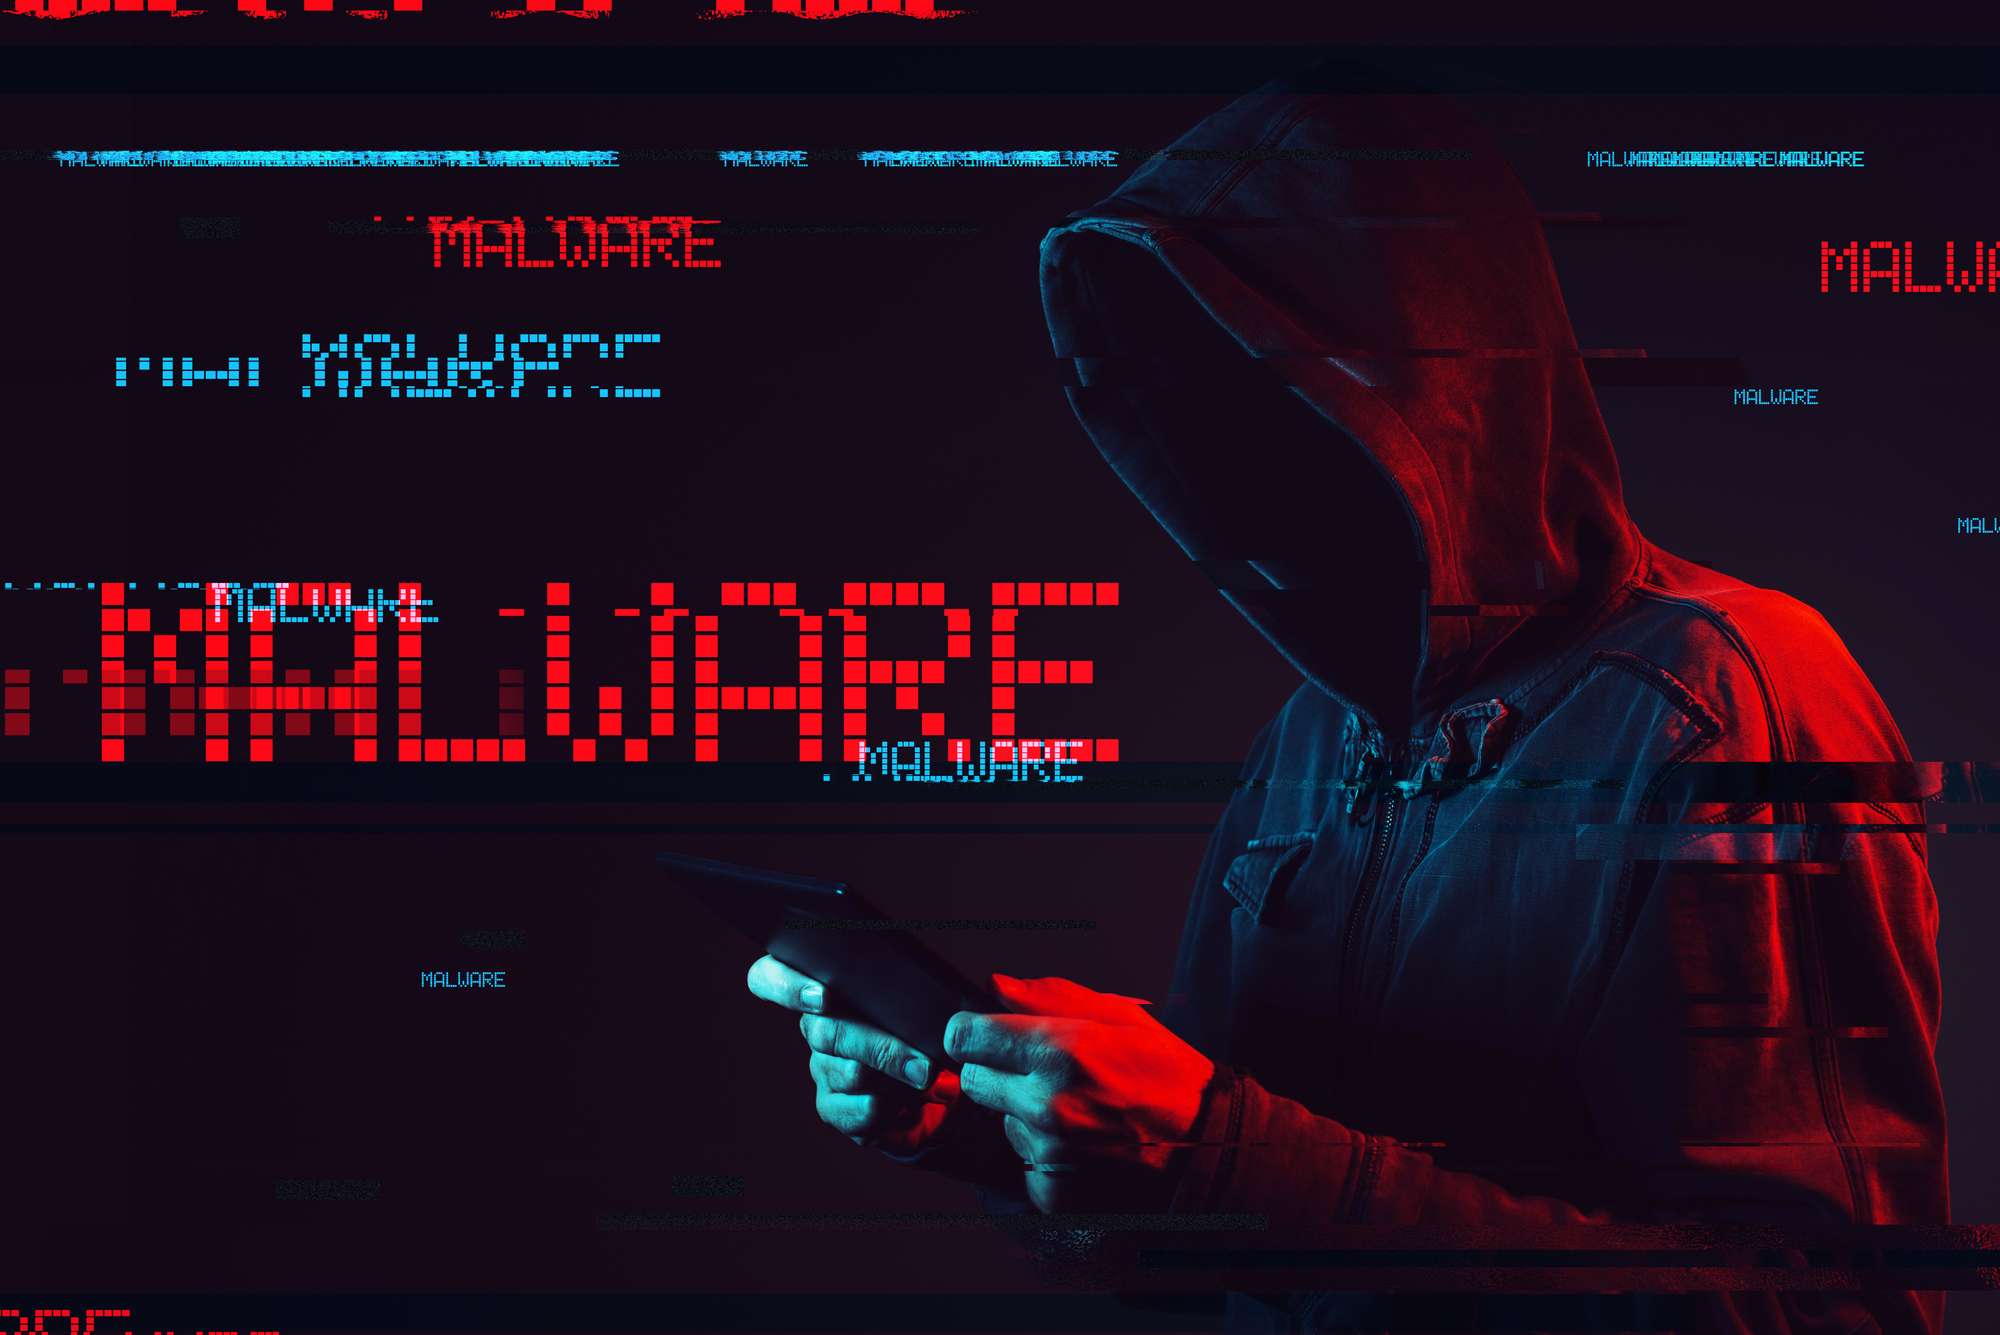 Malware and viruses concept